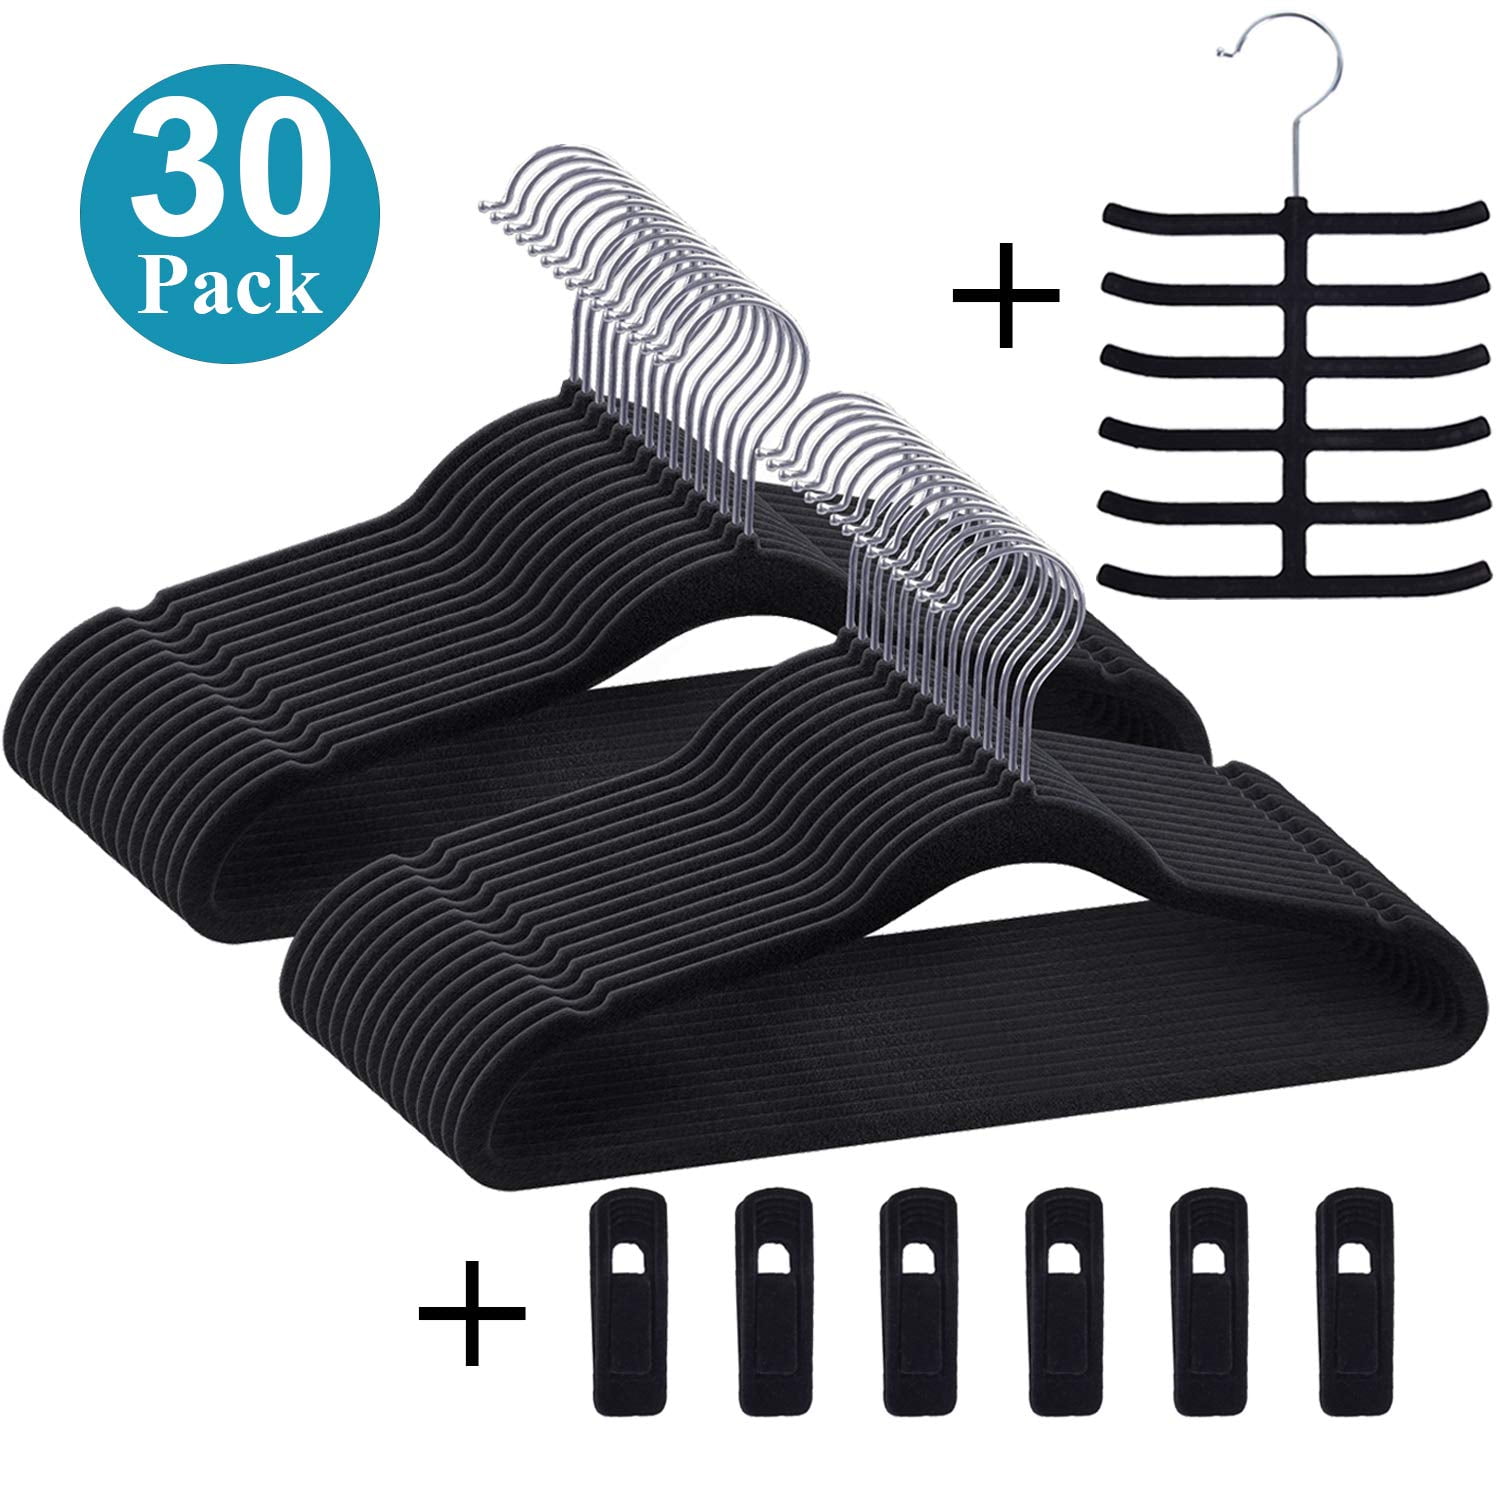 30/50 Pack Velvet Cloth Hangers Premium Lightweight Space Sever